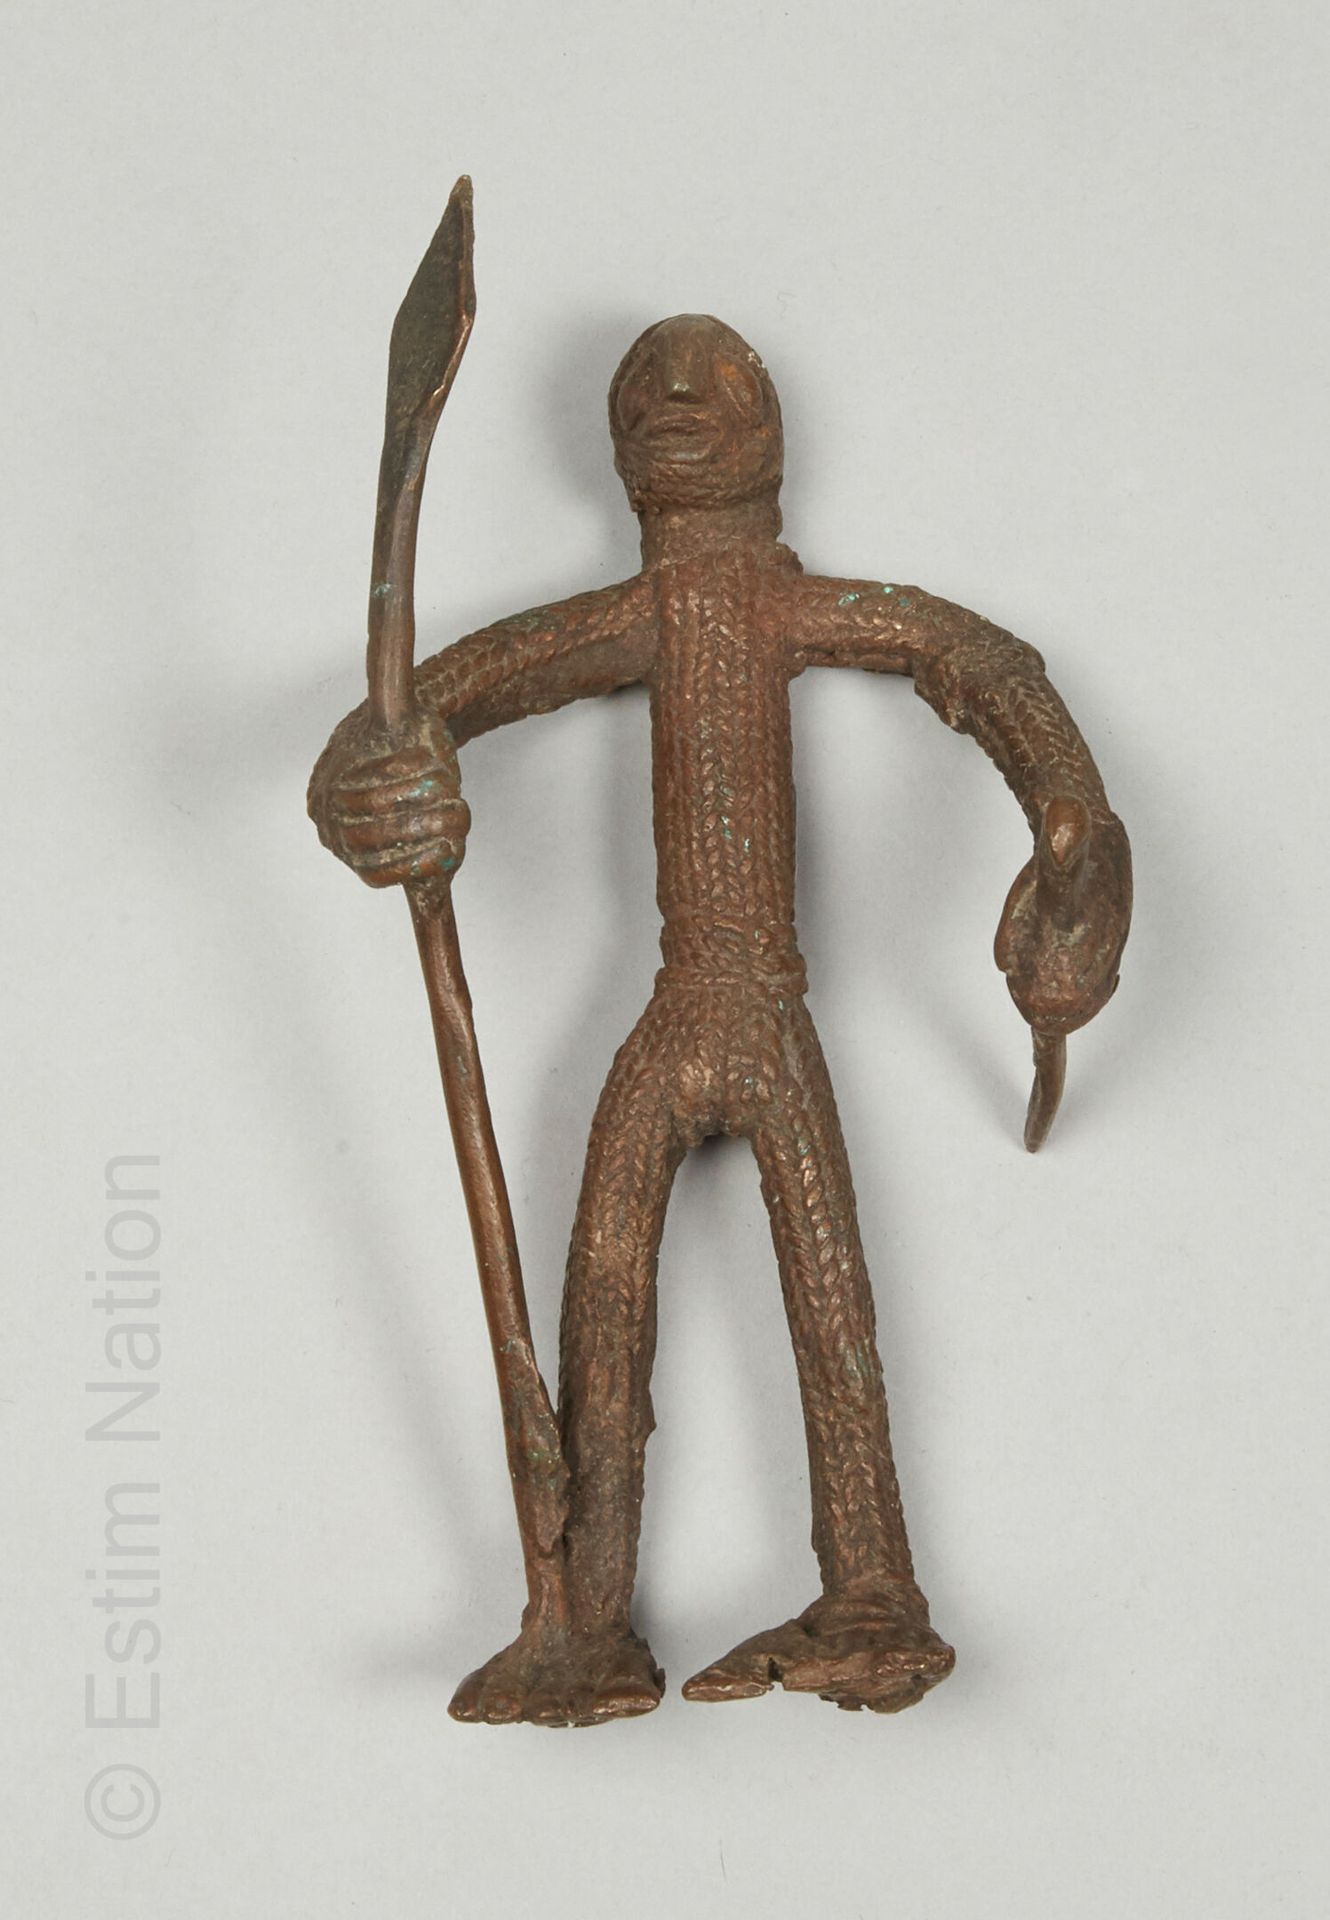 ARTS D'AFRIQUE Gan type statuette, Burkina Faso
Copper alloy
H. 18,5 cm

Represe&hellip;